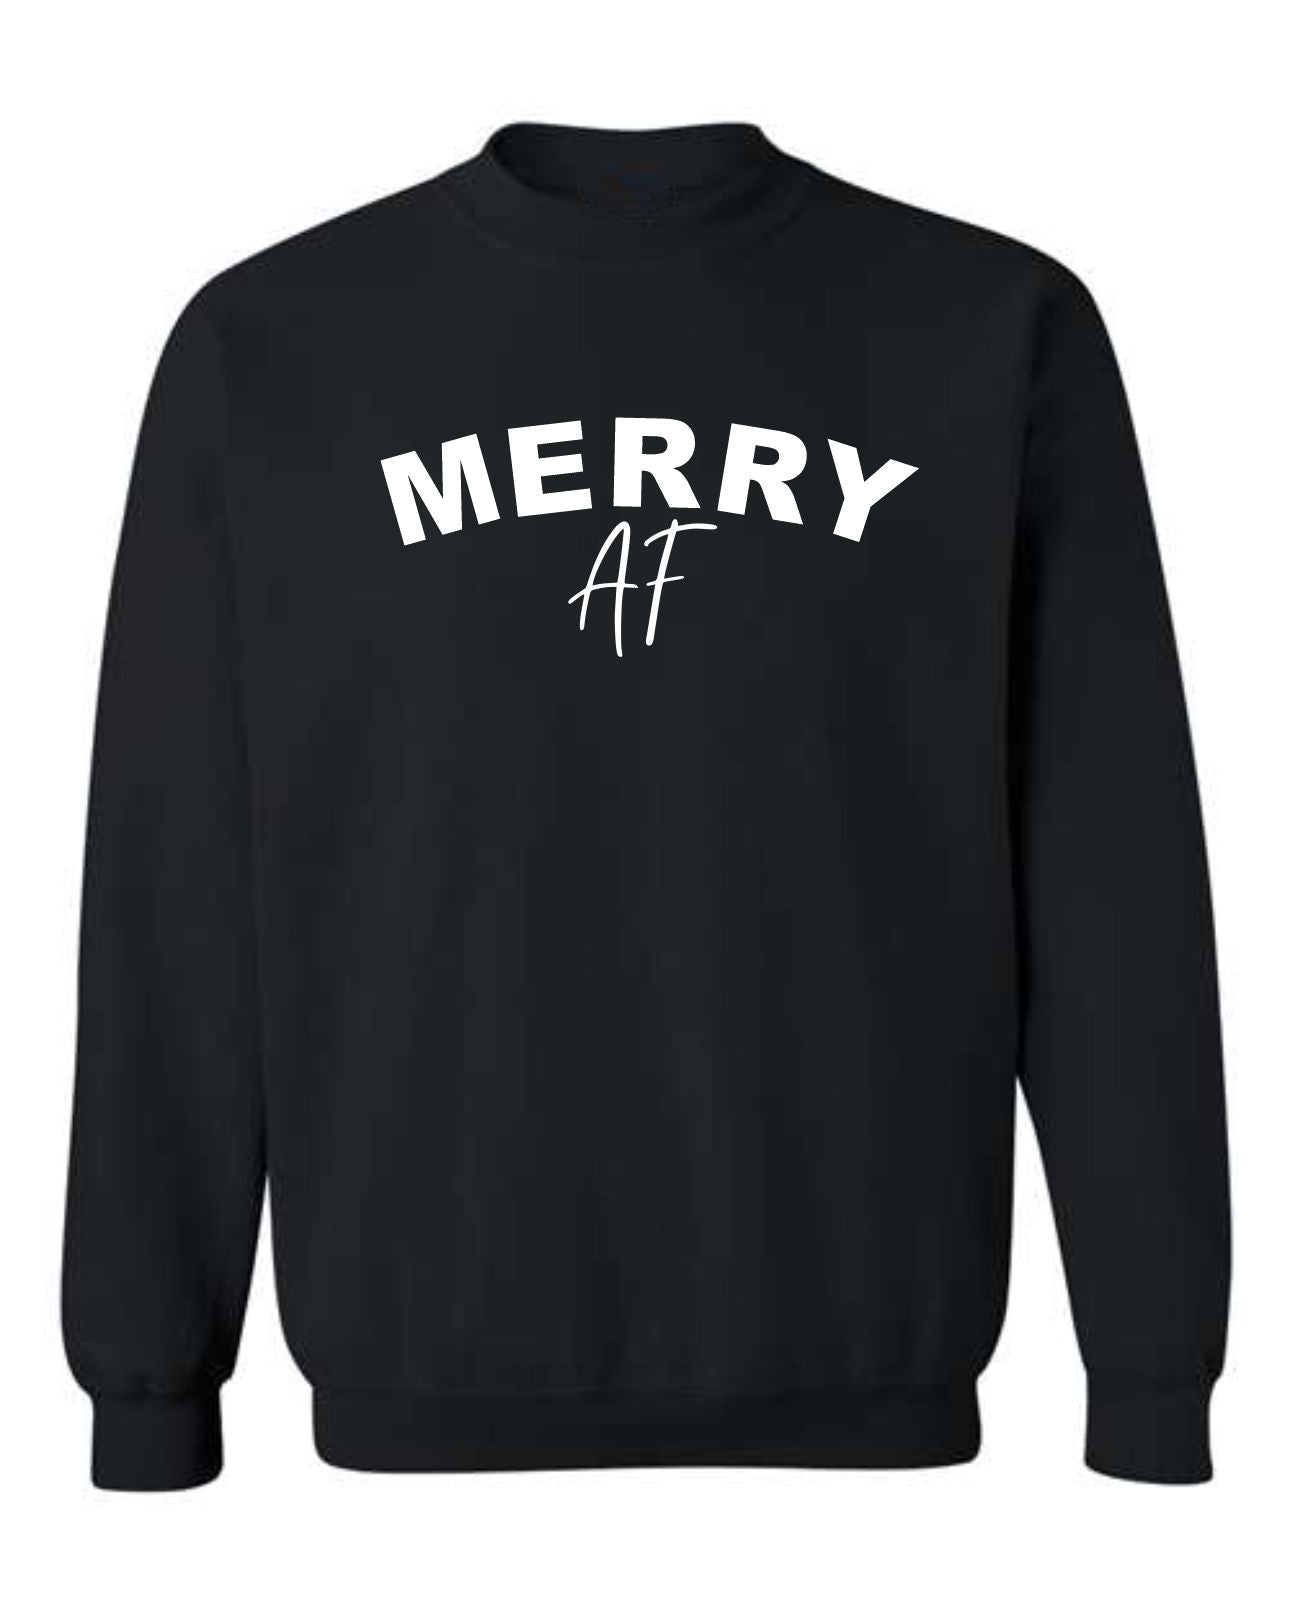 "Merry AF" Unisex Crewneck Sweatshirt